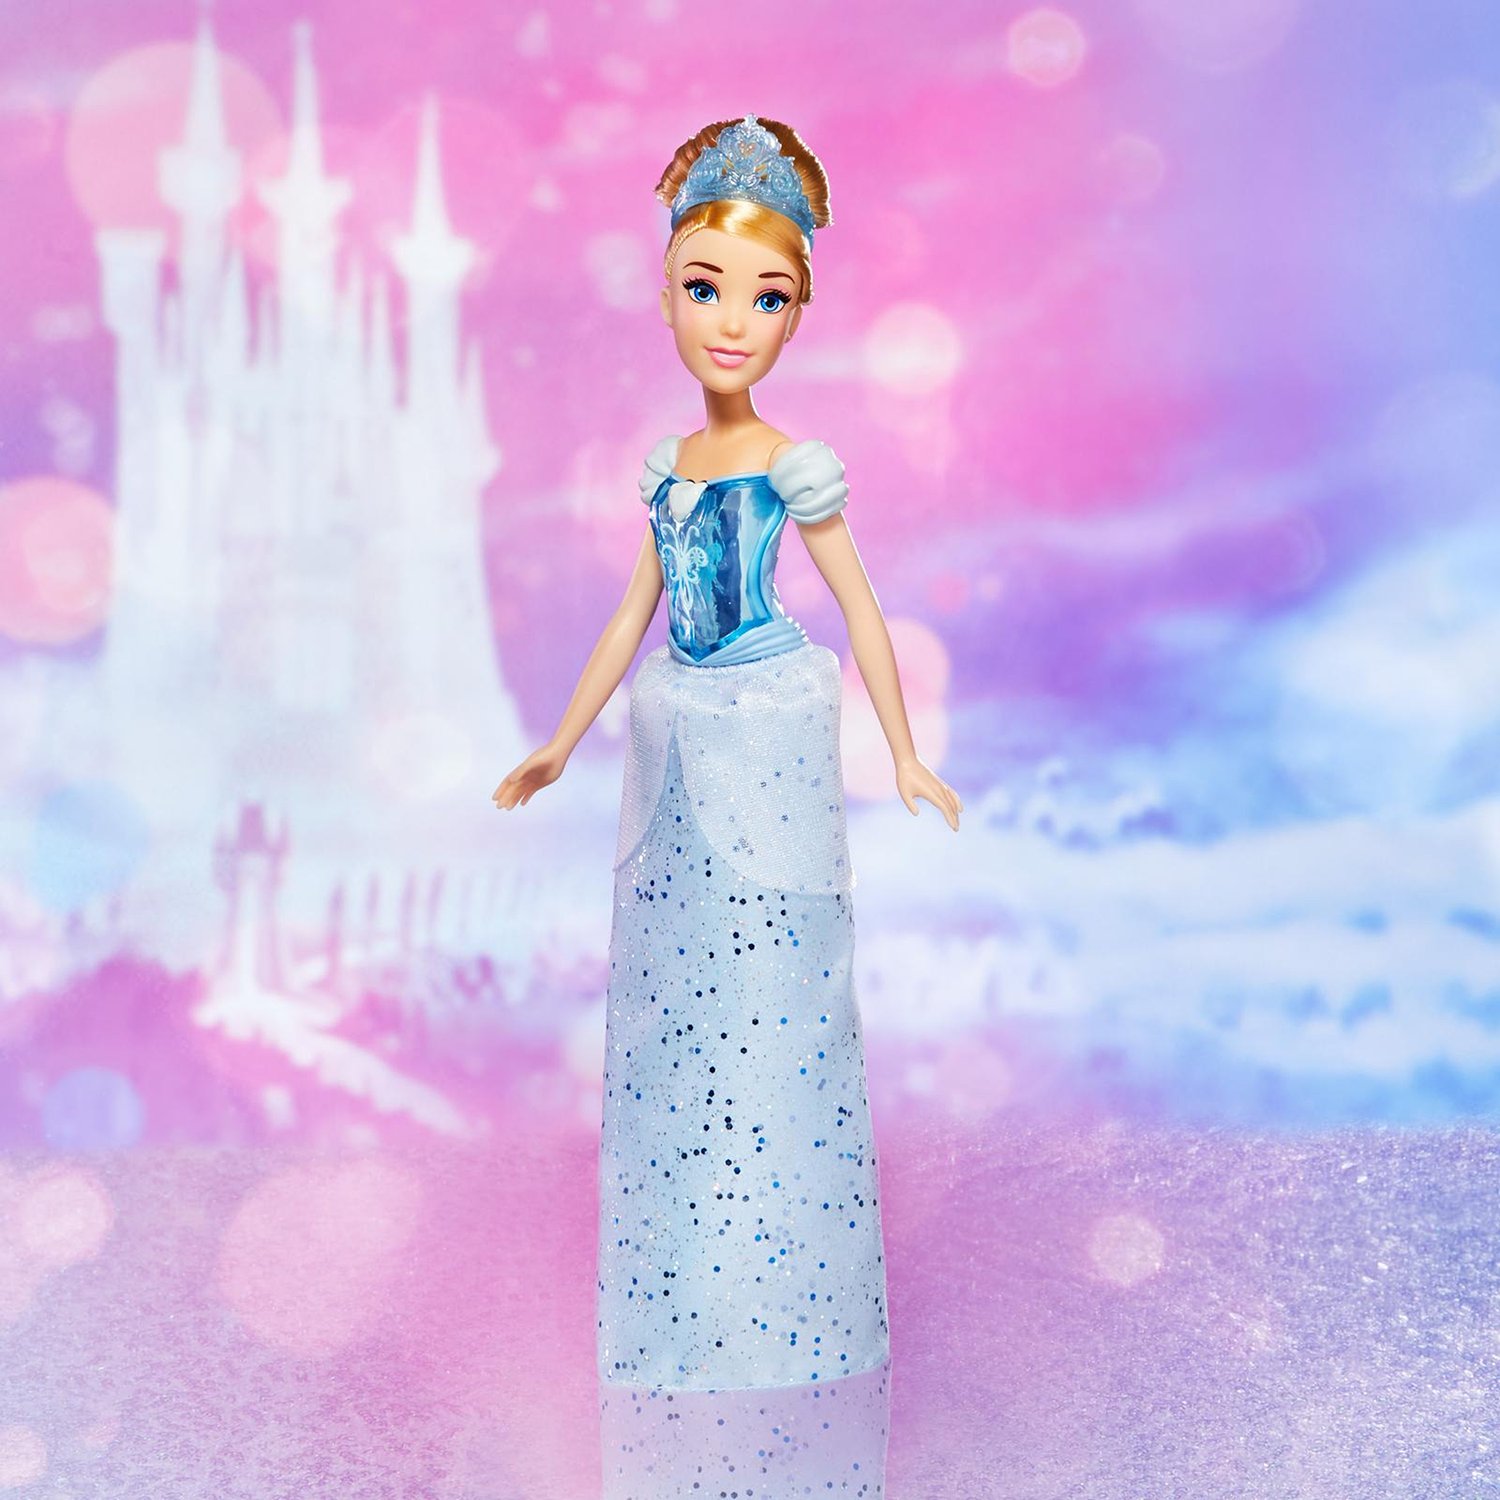 Кукла Disney Princess Hasbro Золушка F08975X6